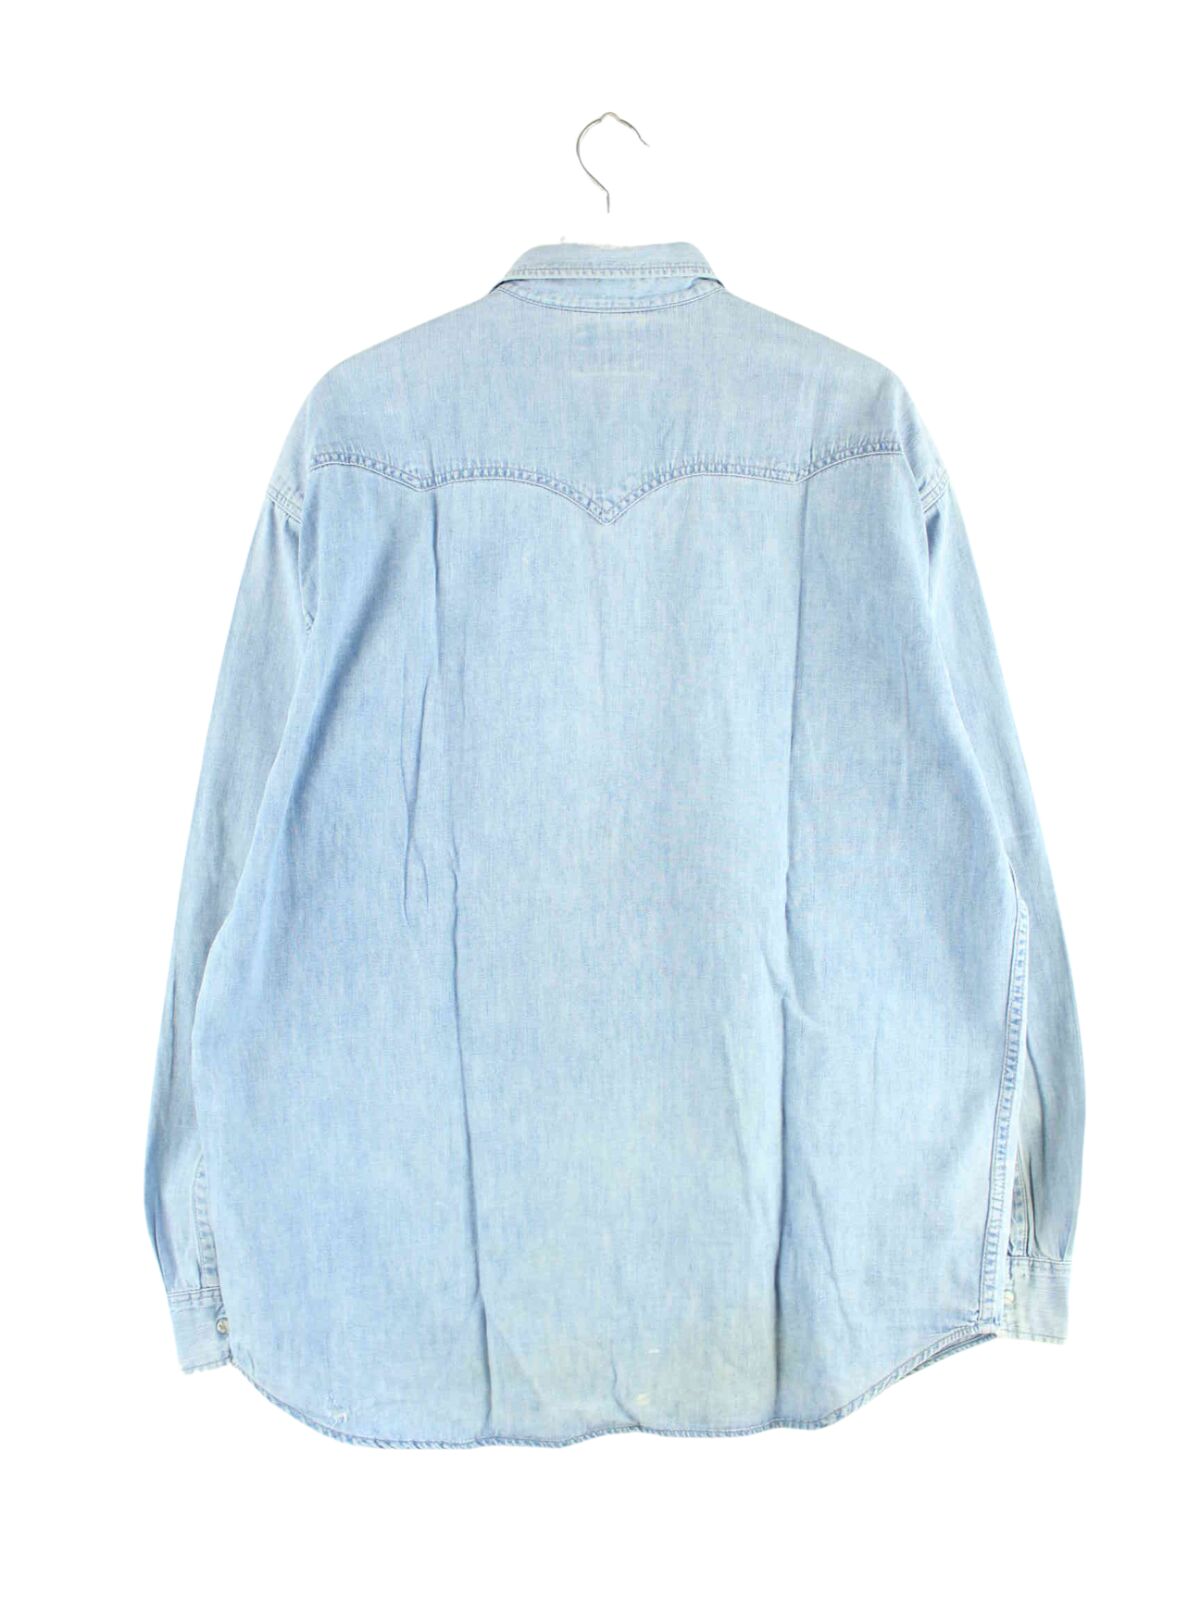 Levi's 1995 Vintage Jeans Hemd Blau XL (back image)